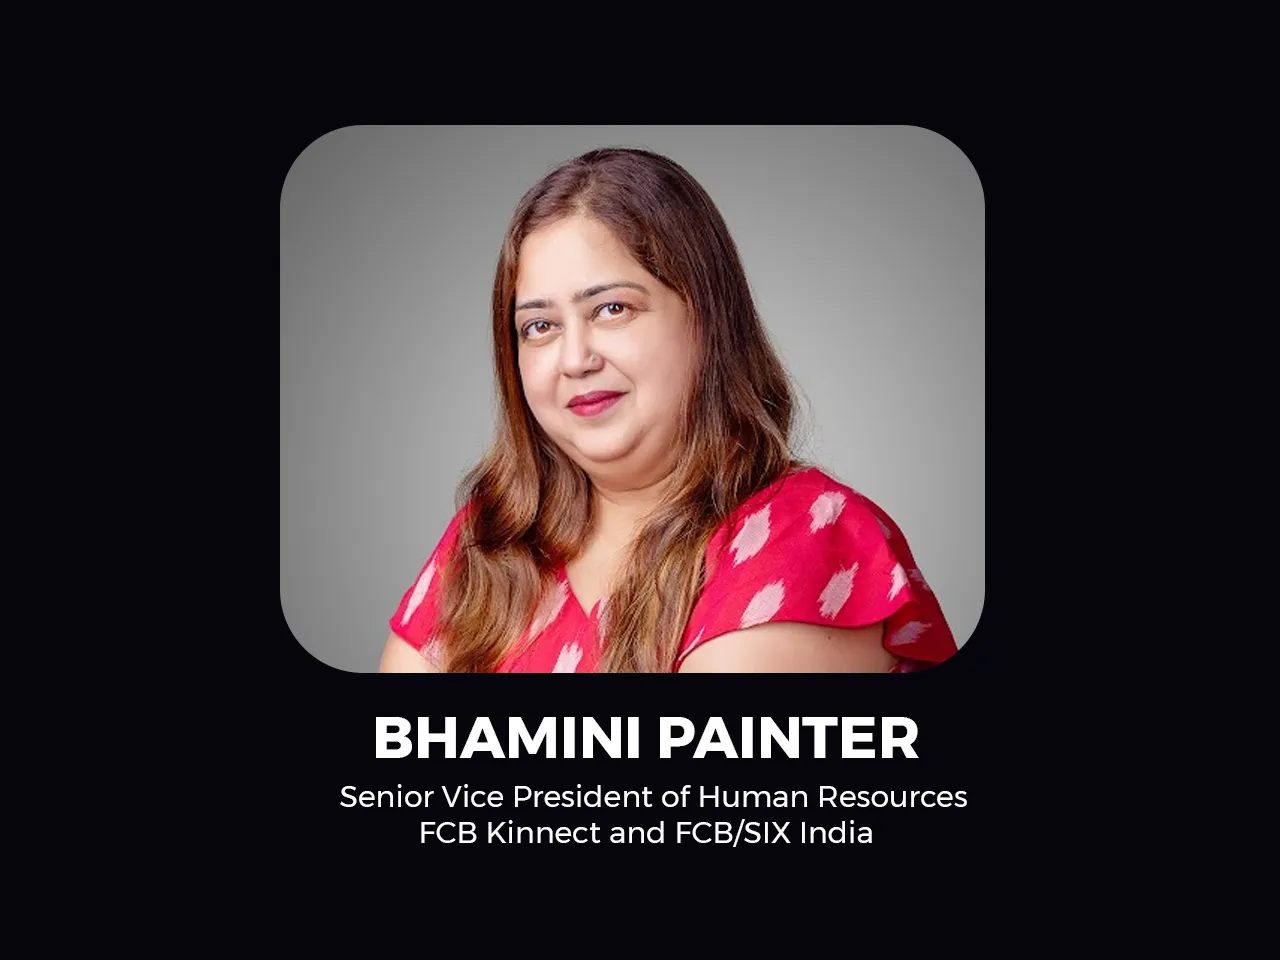 Bhamini Painter